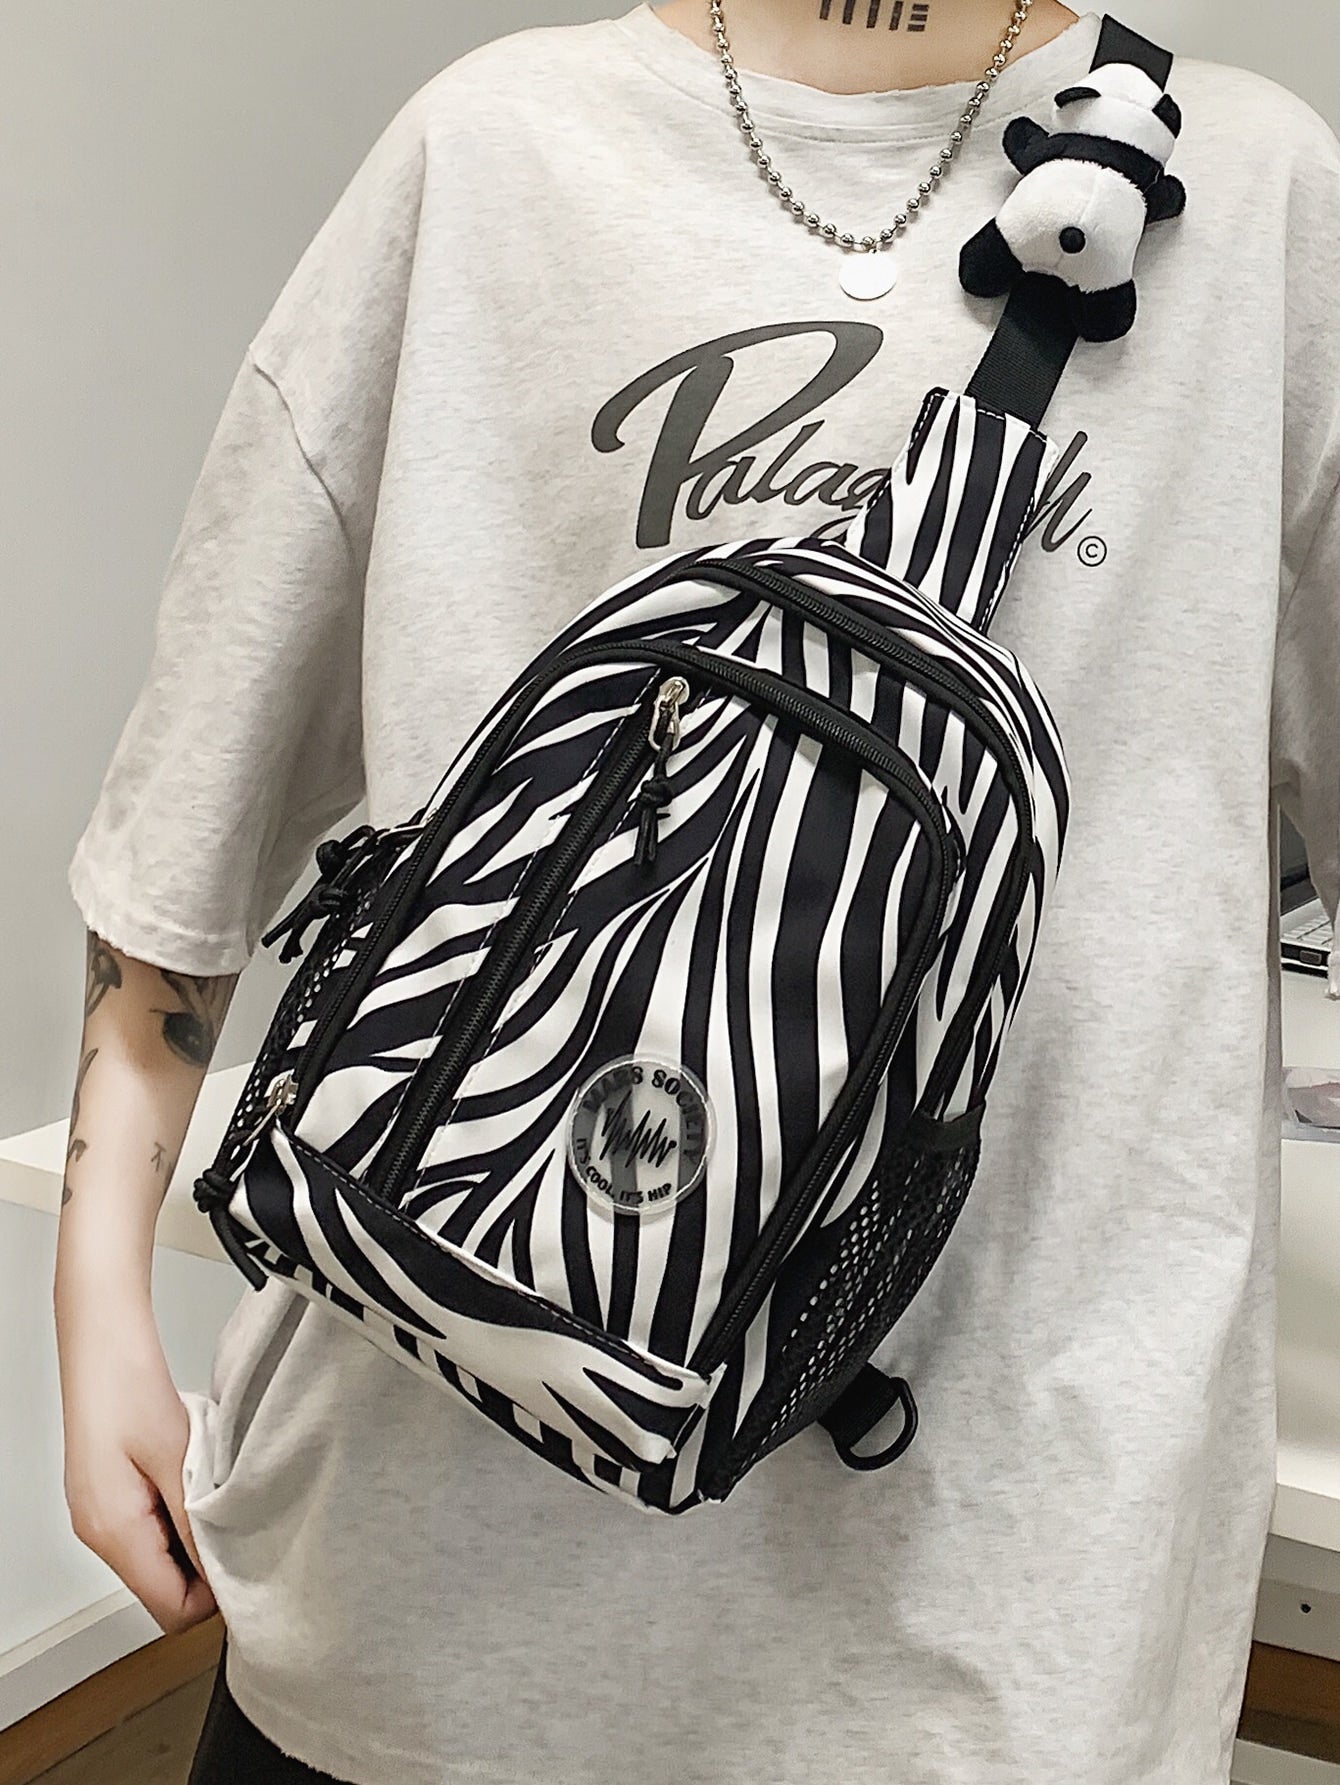 Zebra Striped Sling Bag